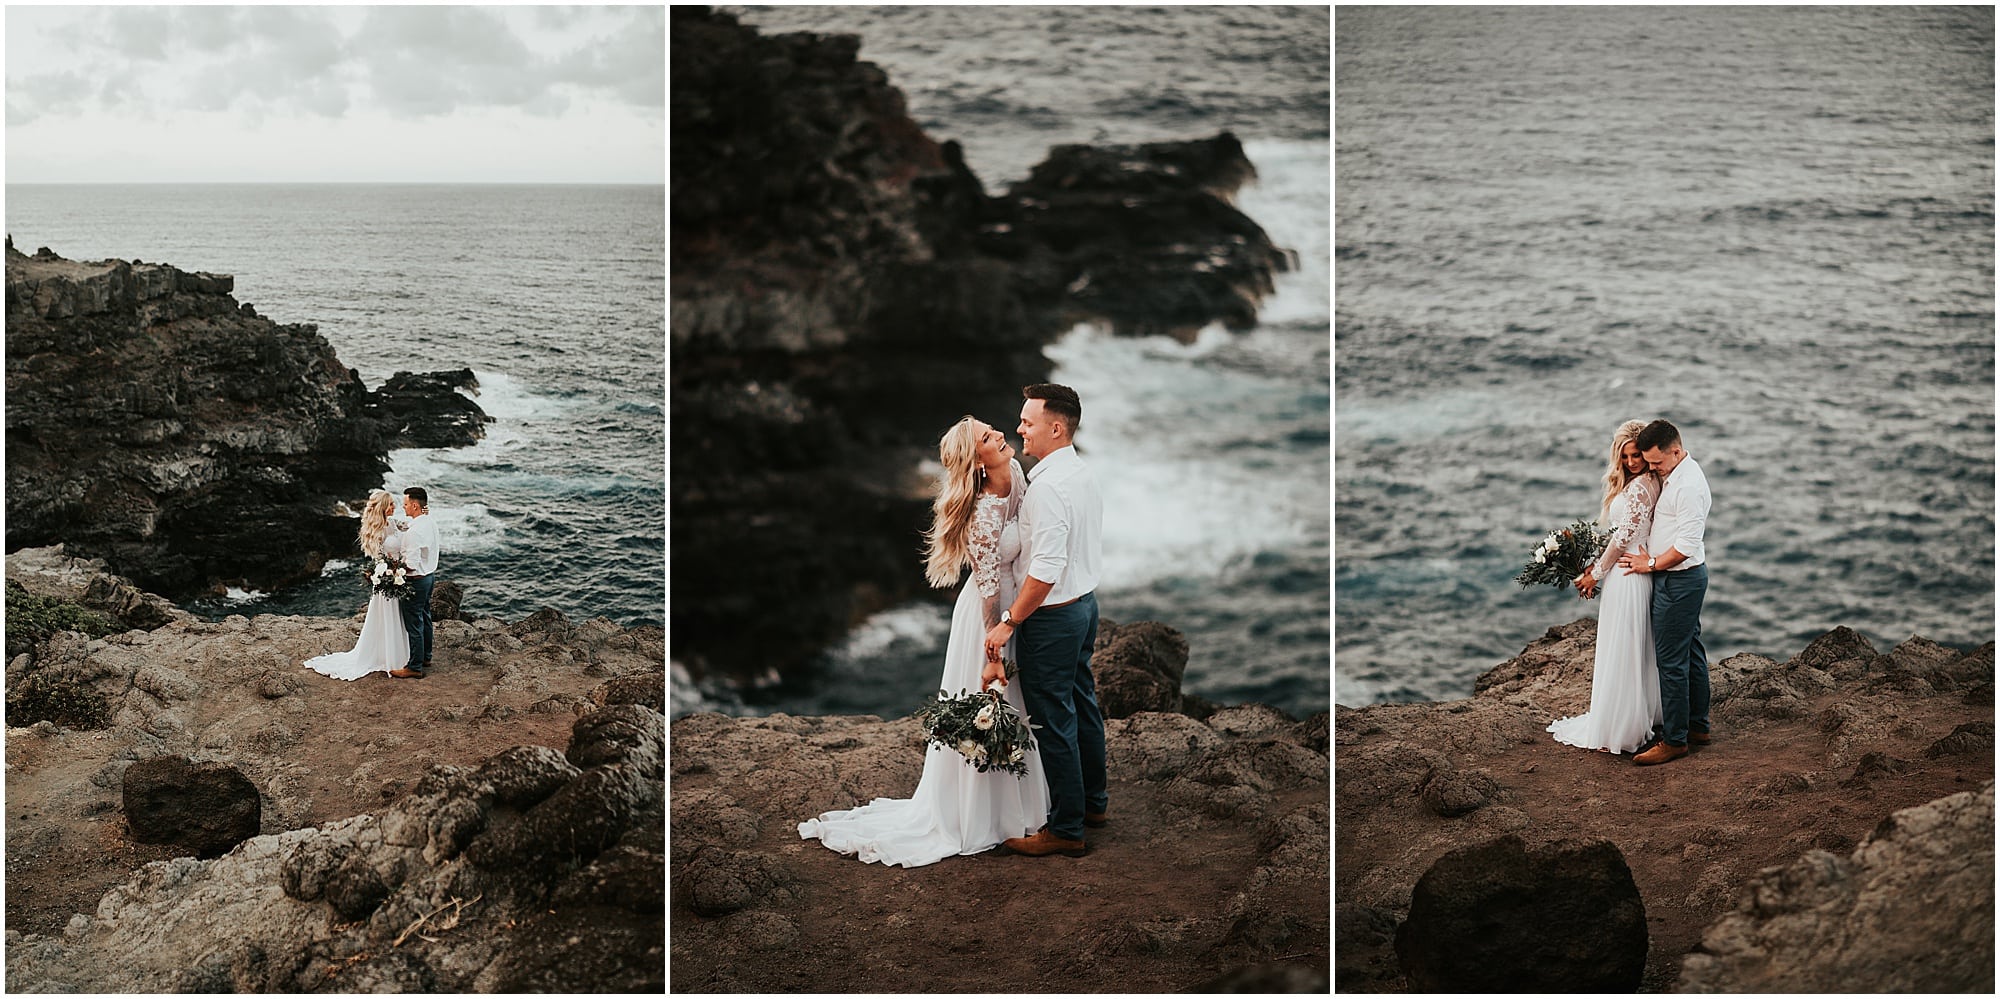 Maui wedding photographer39